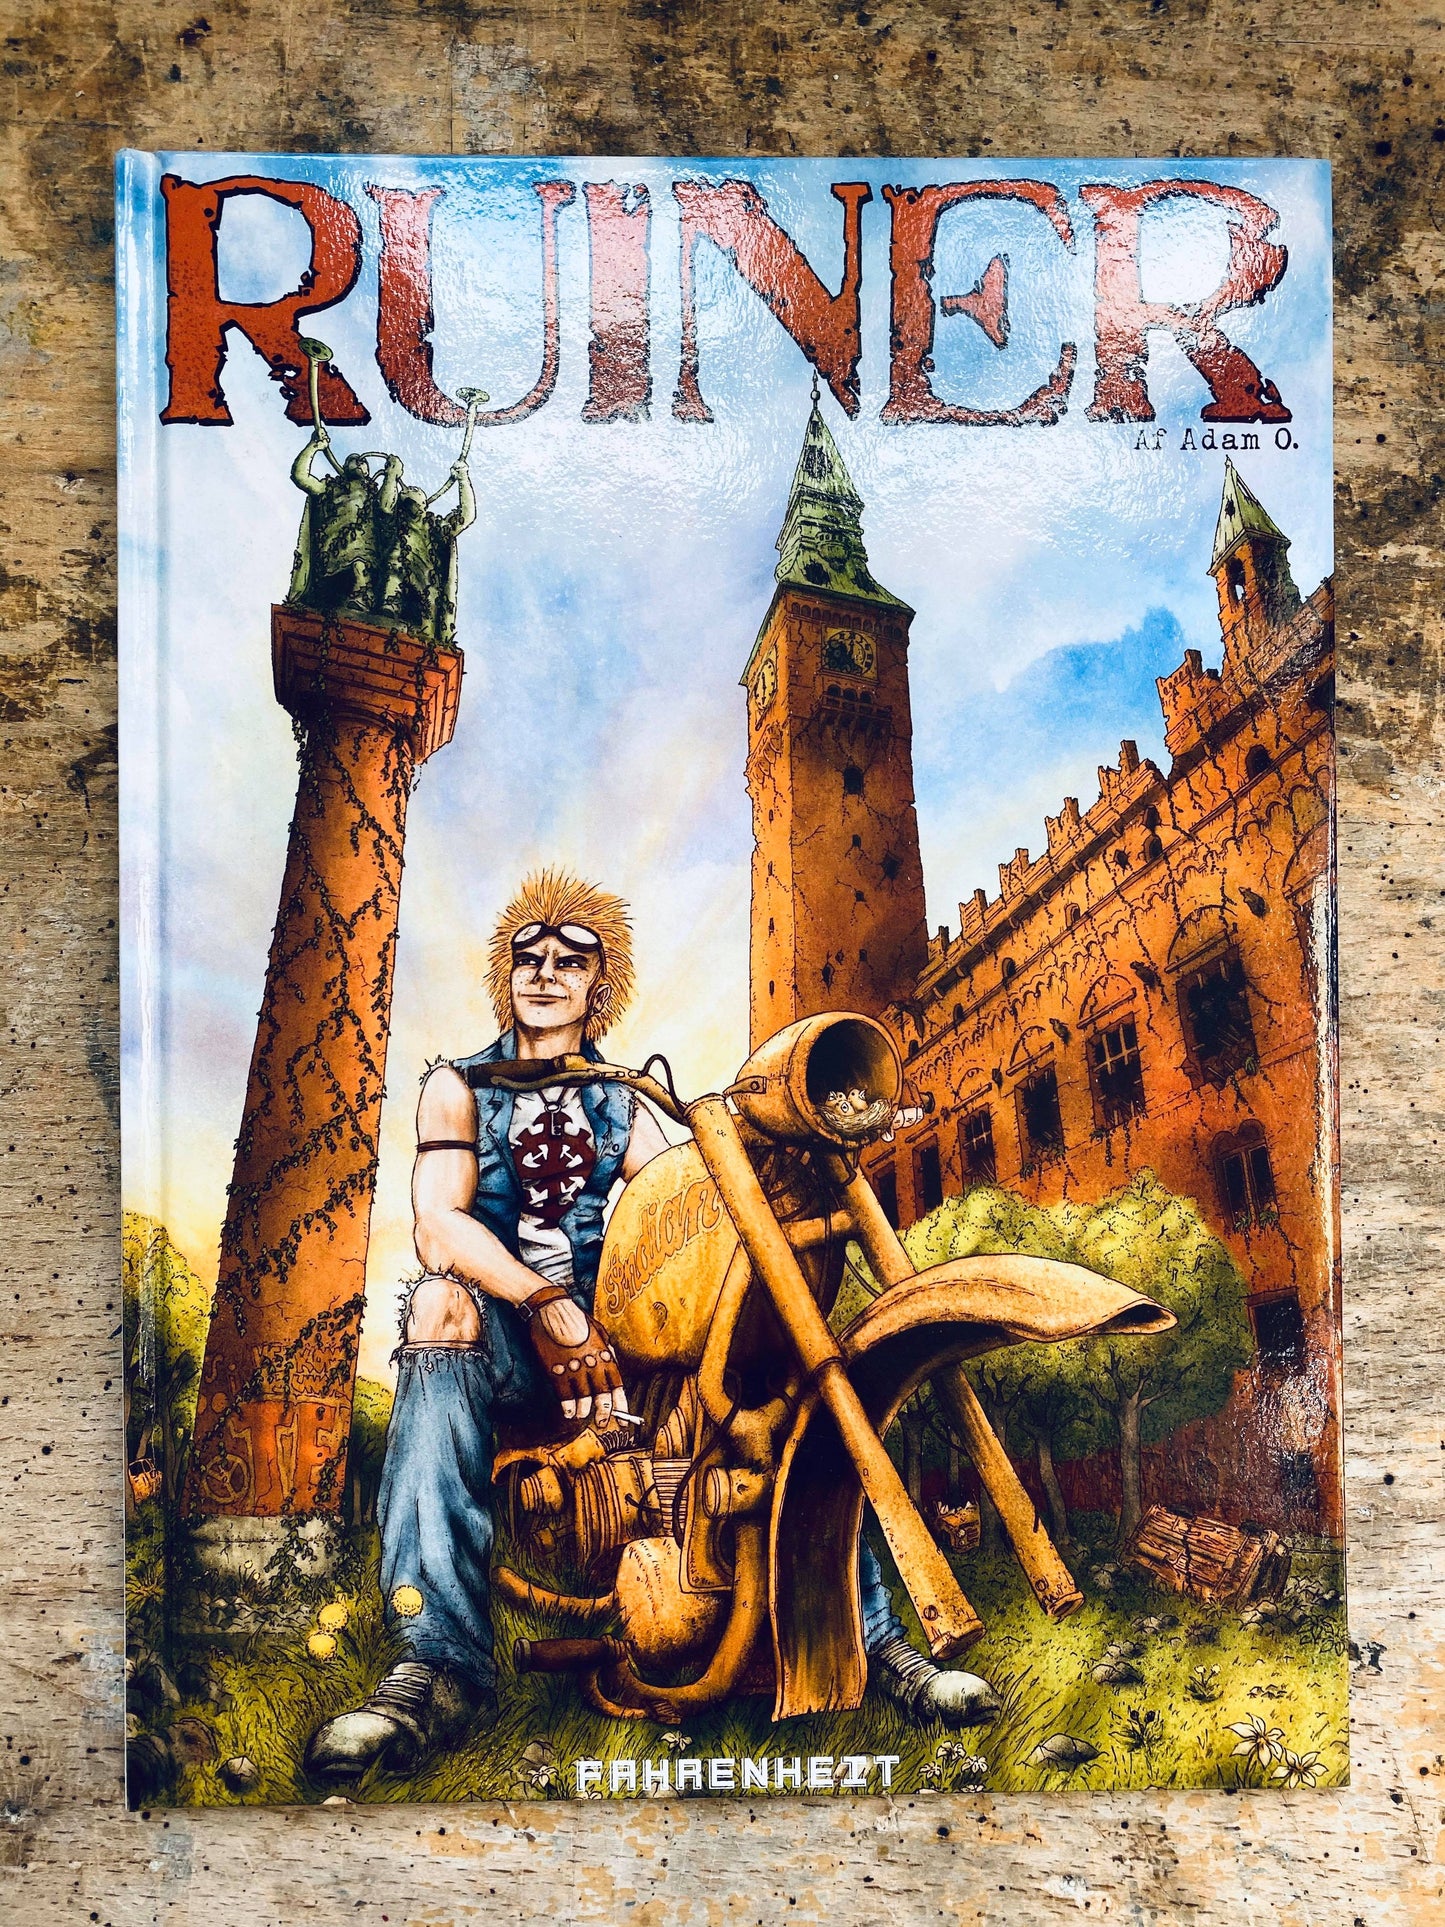 Ruiner Seriebok by Adam O